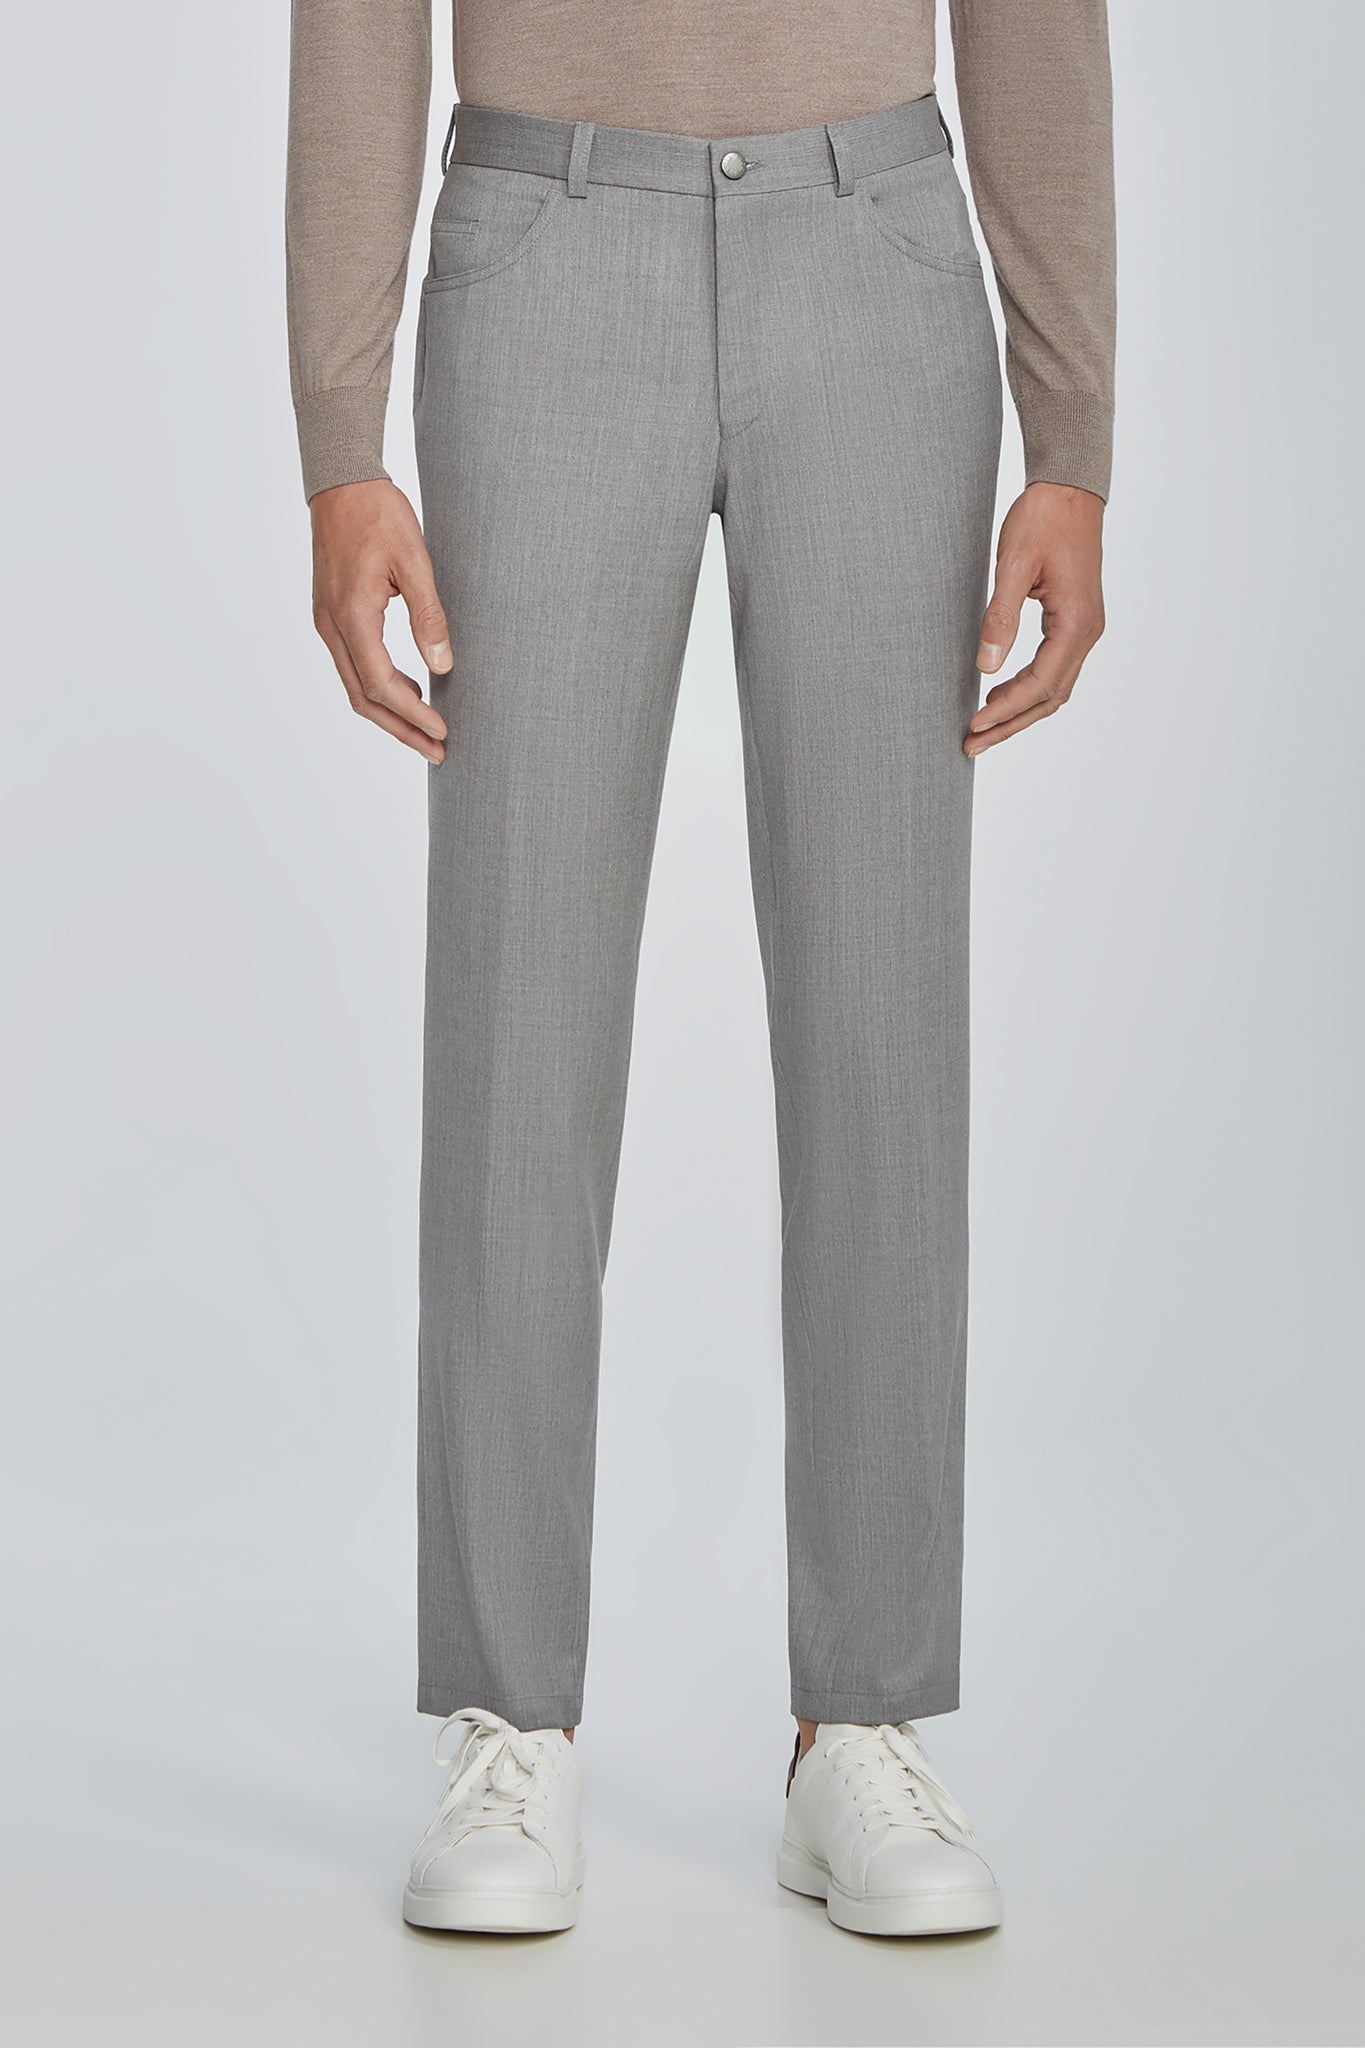 Vue alternative Pantalon 5 poches gris clair unie Sage